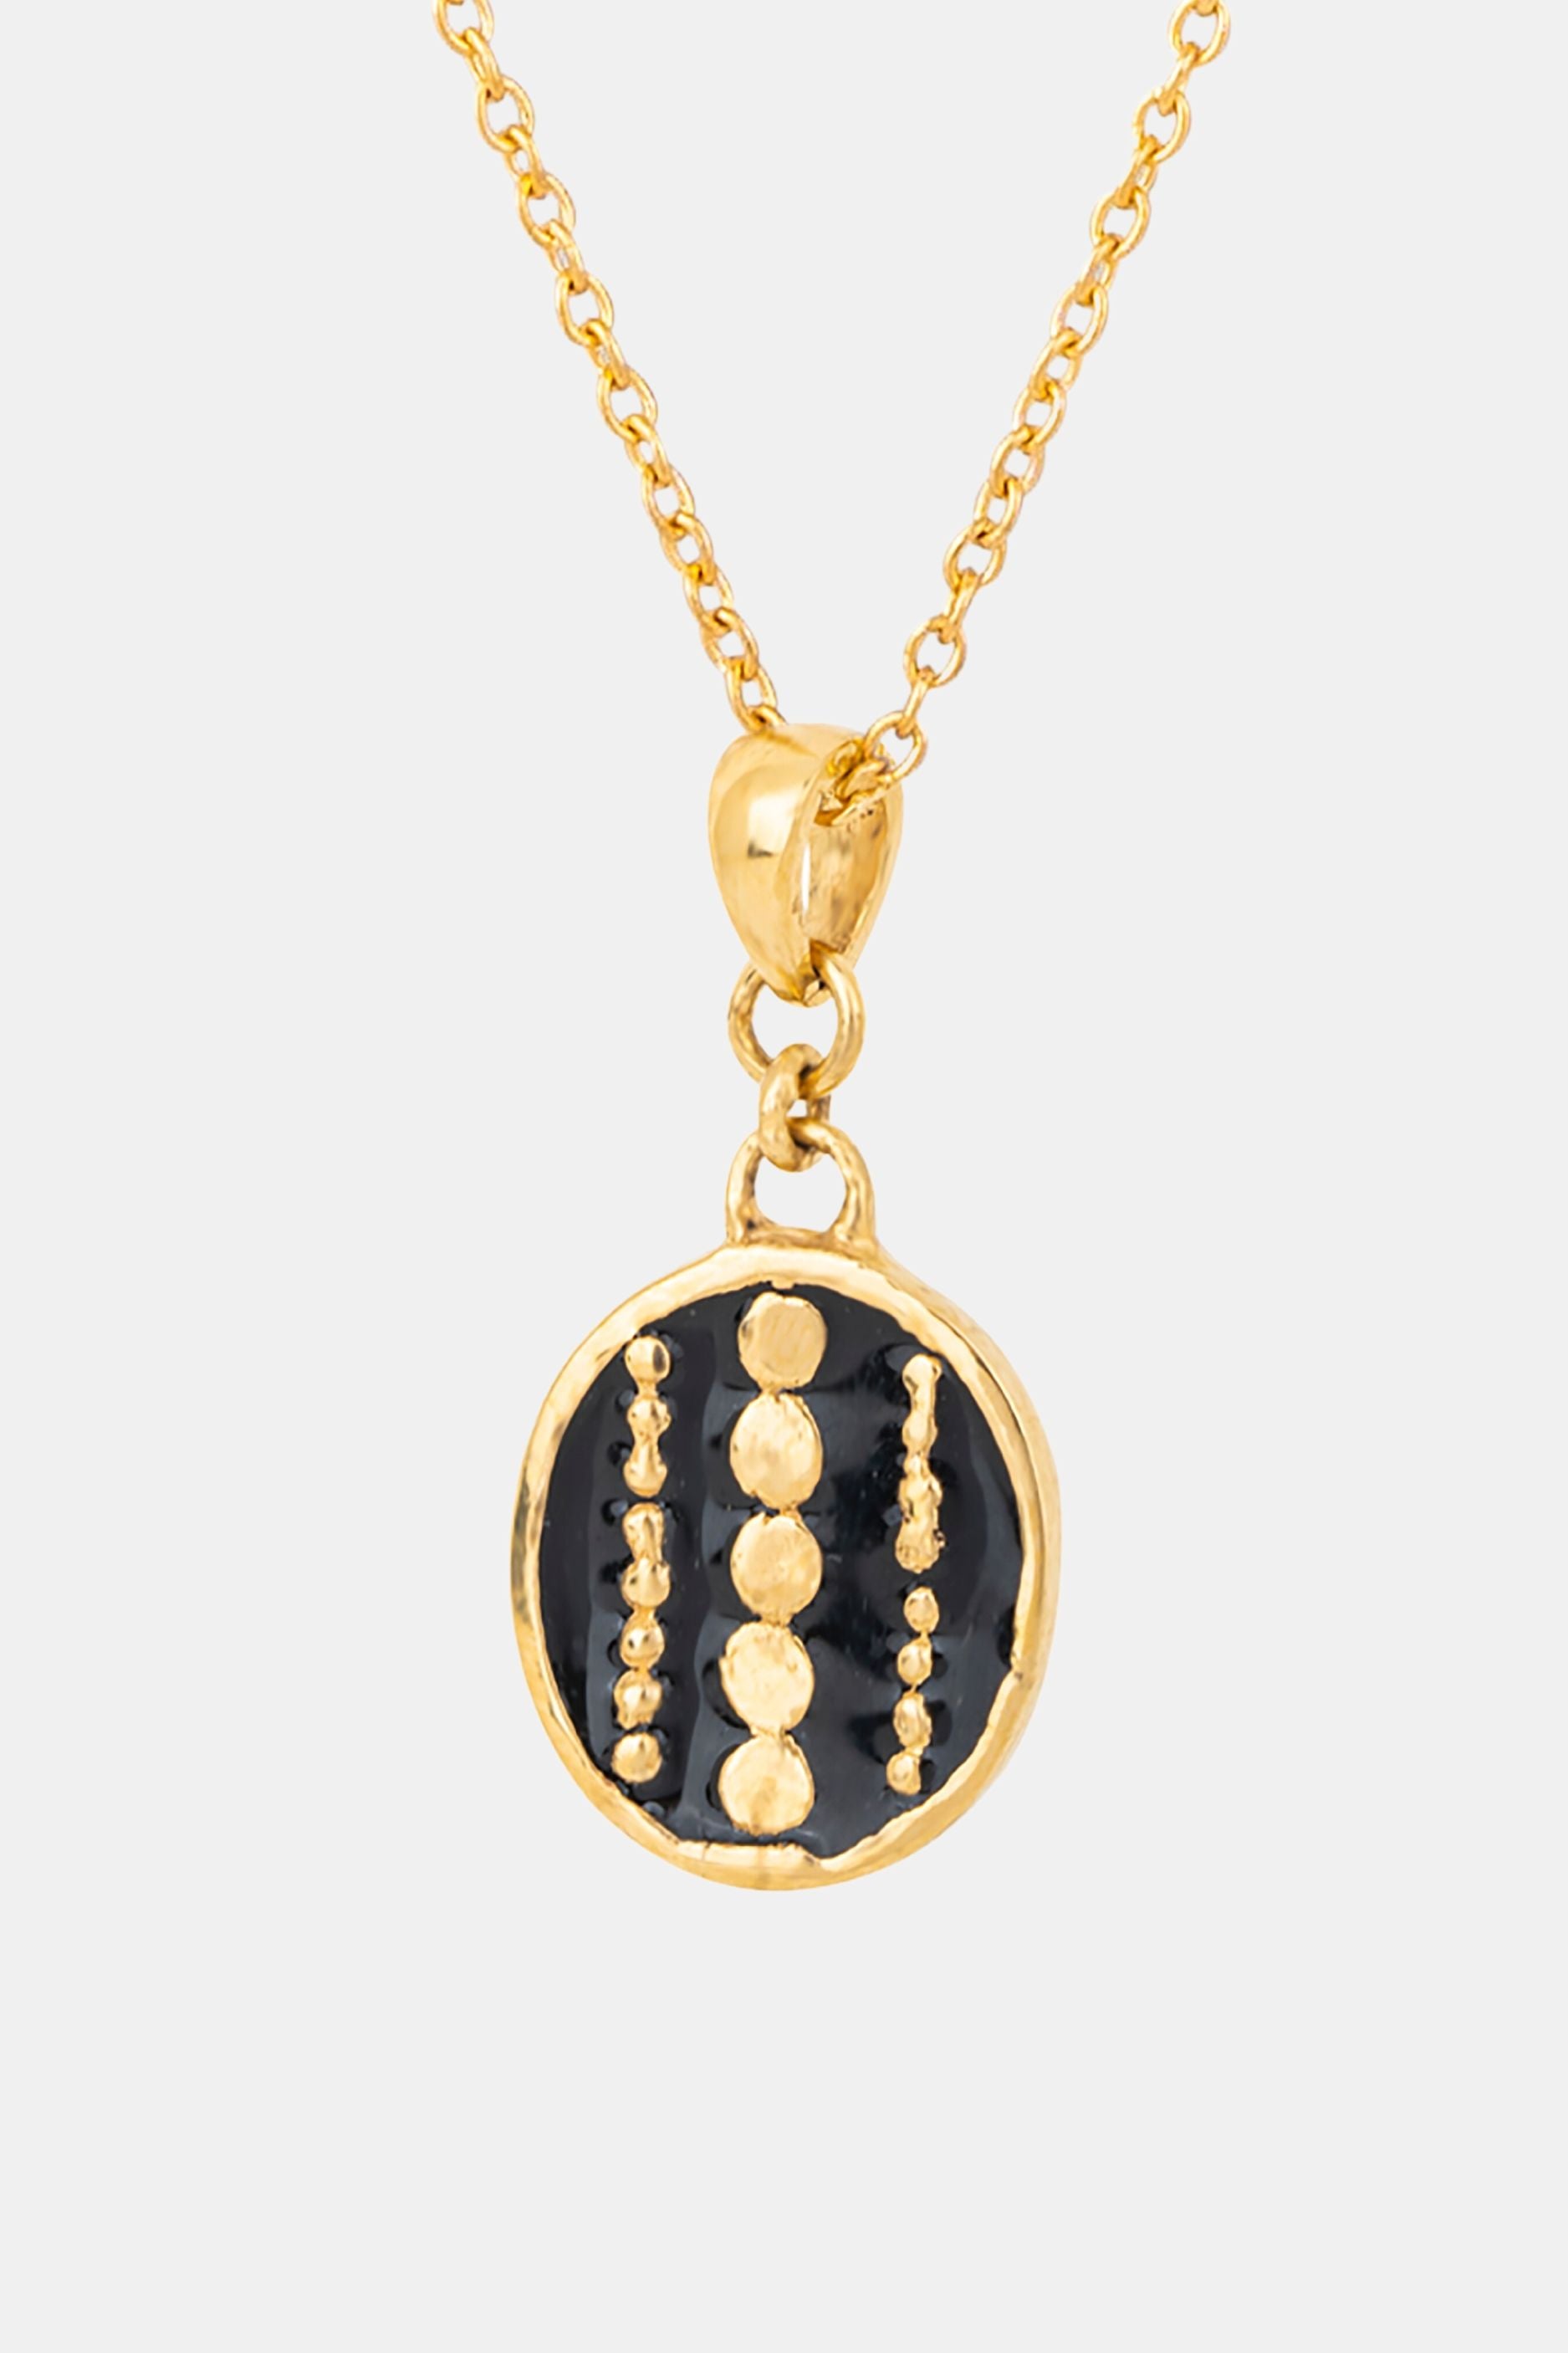 Mrs Black enamel 18k mini gold pendant necklace Mamour Paris Jewelry